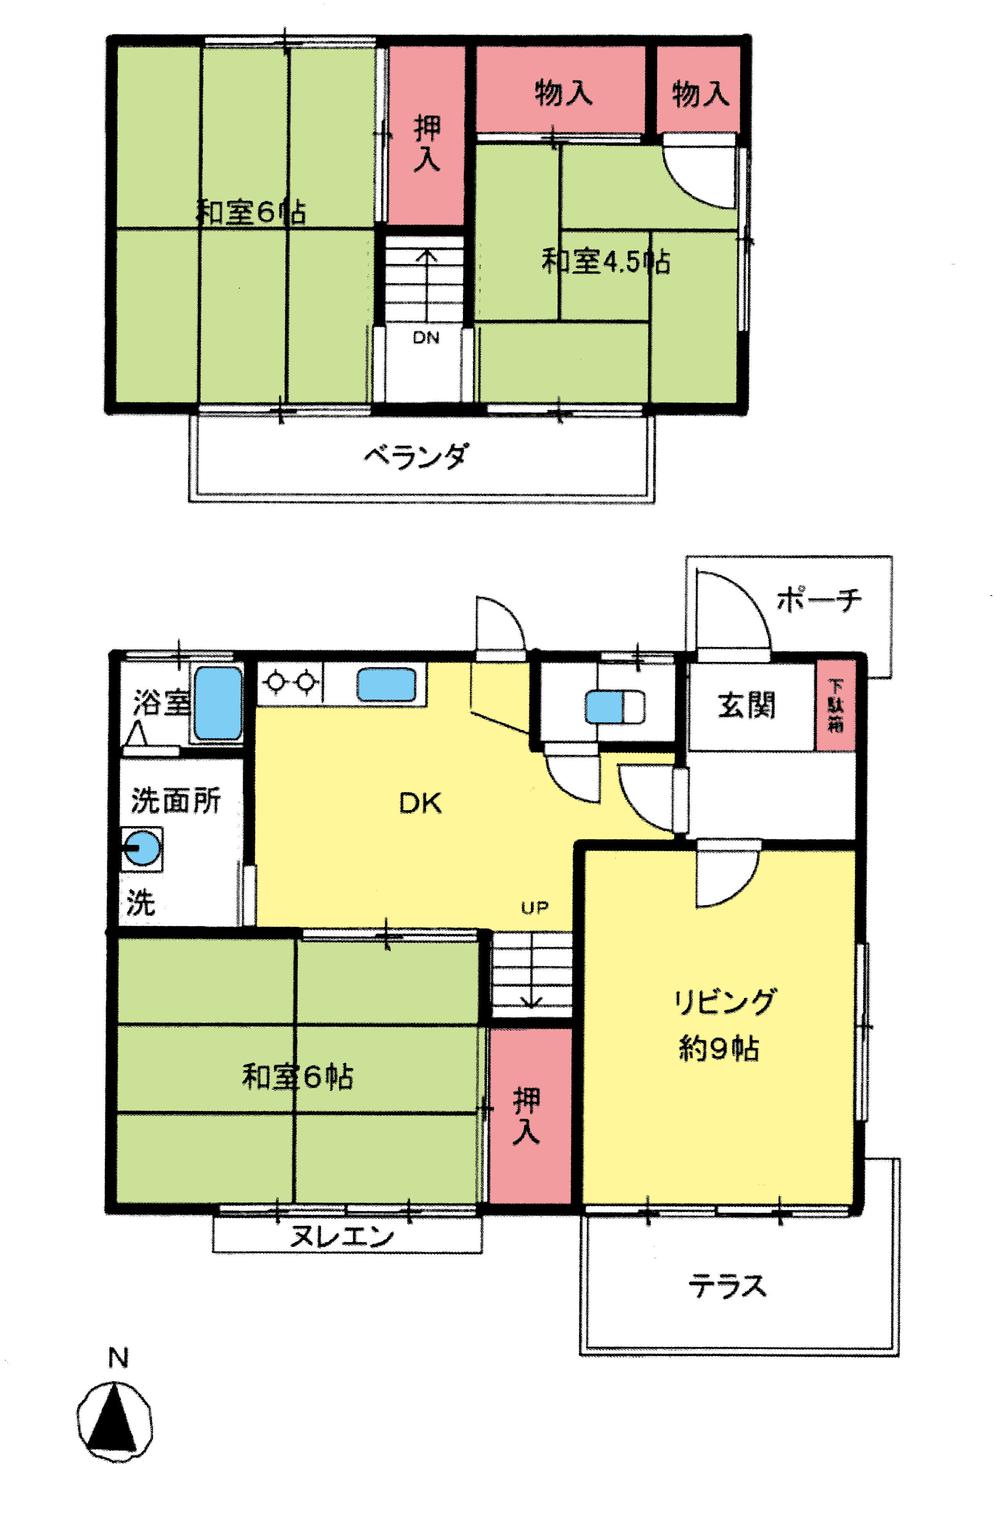 Floor plan. 10 million yen, 3LDK, Land area 99.27 sq m , Building area 62.7 sq m floor plan